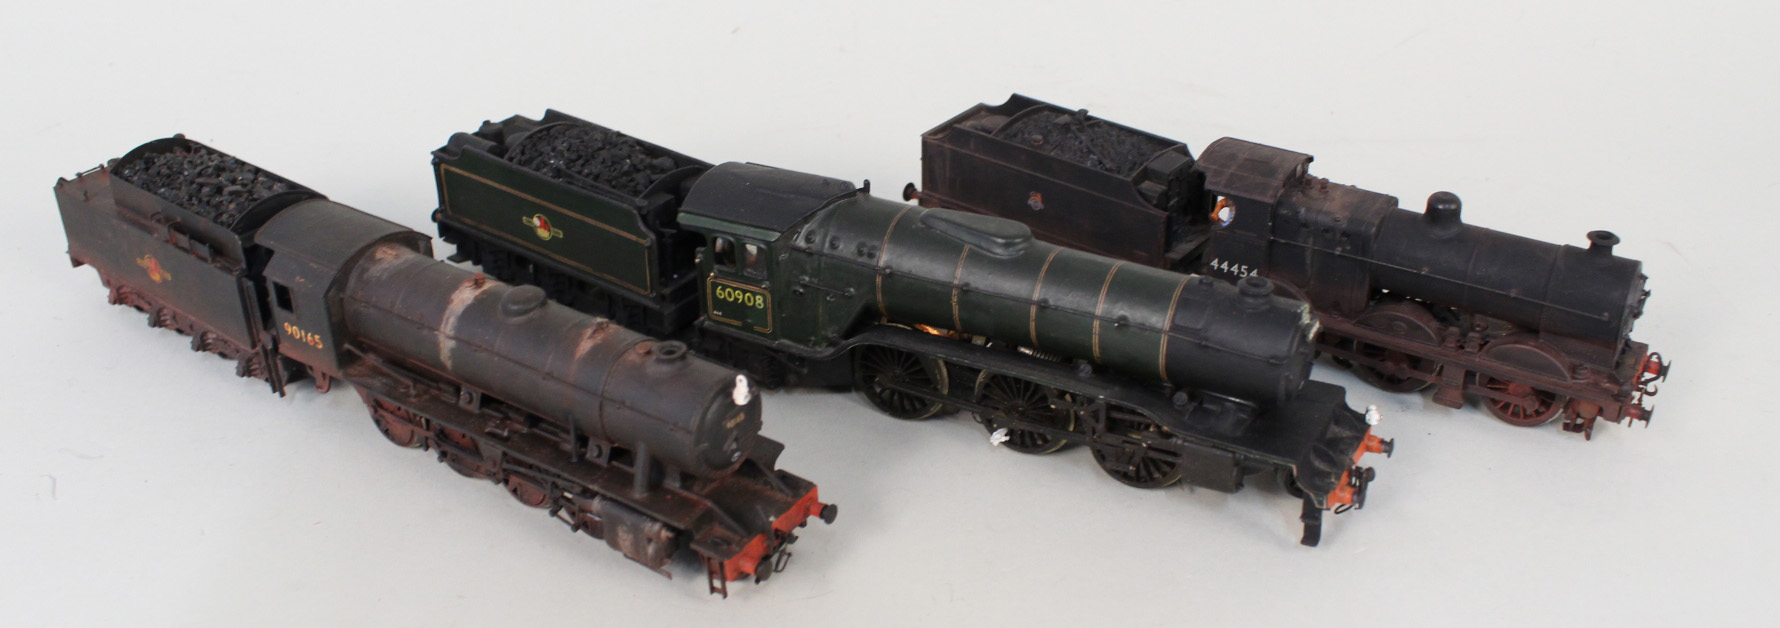 Two kit built 00 gauge locos plus an Airfix loco 444511